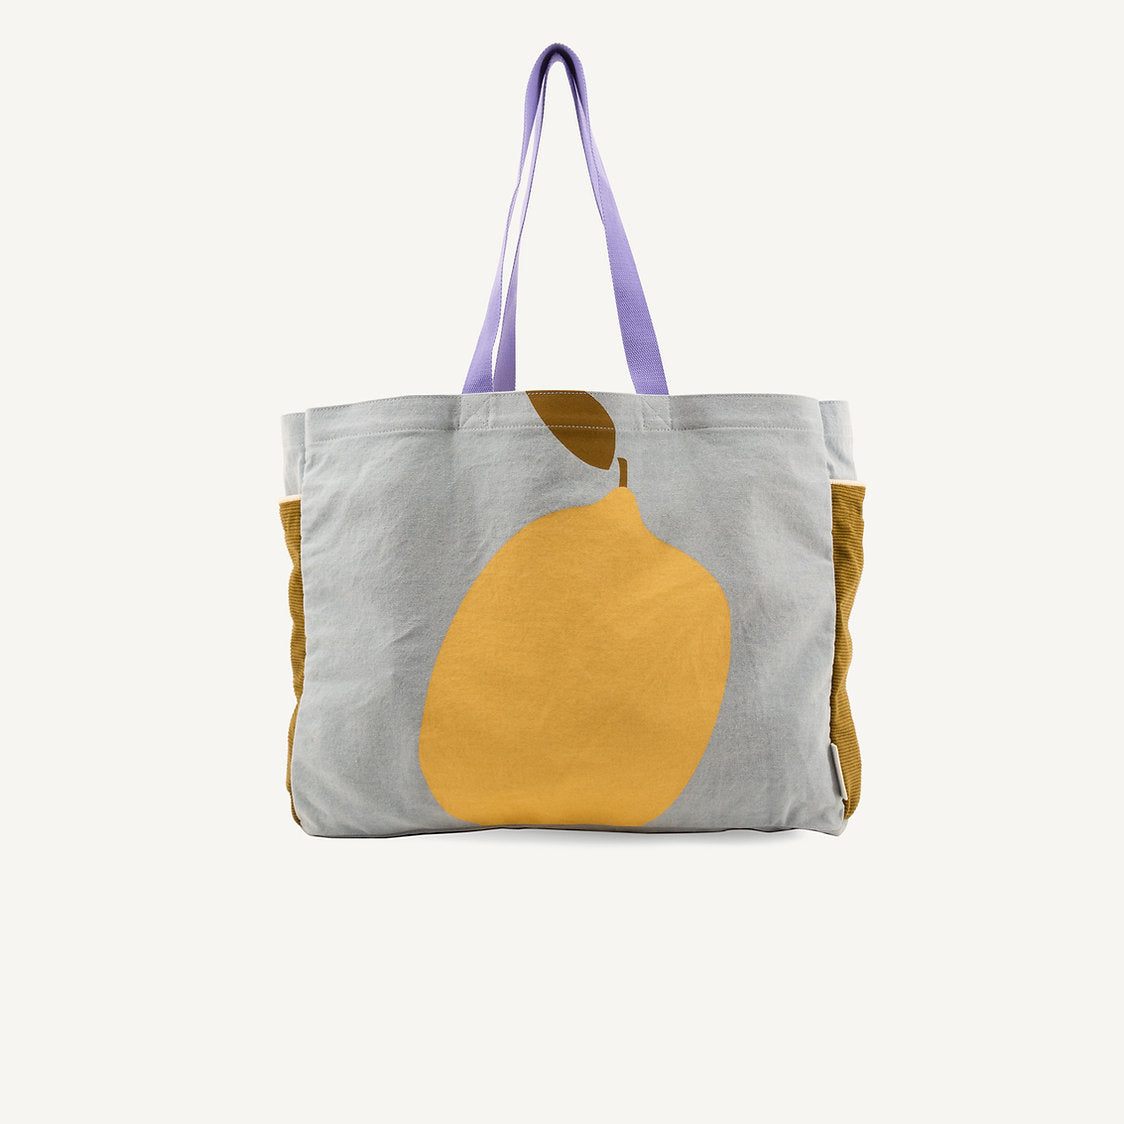 Pears &amp; Lemons bag